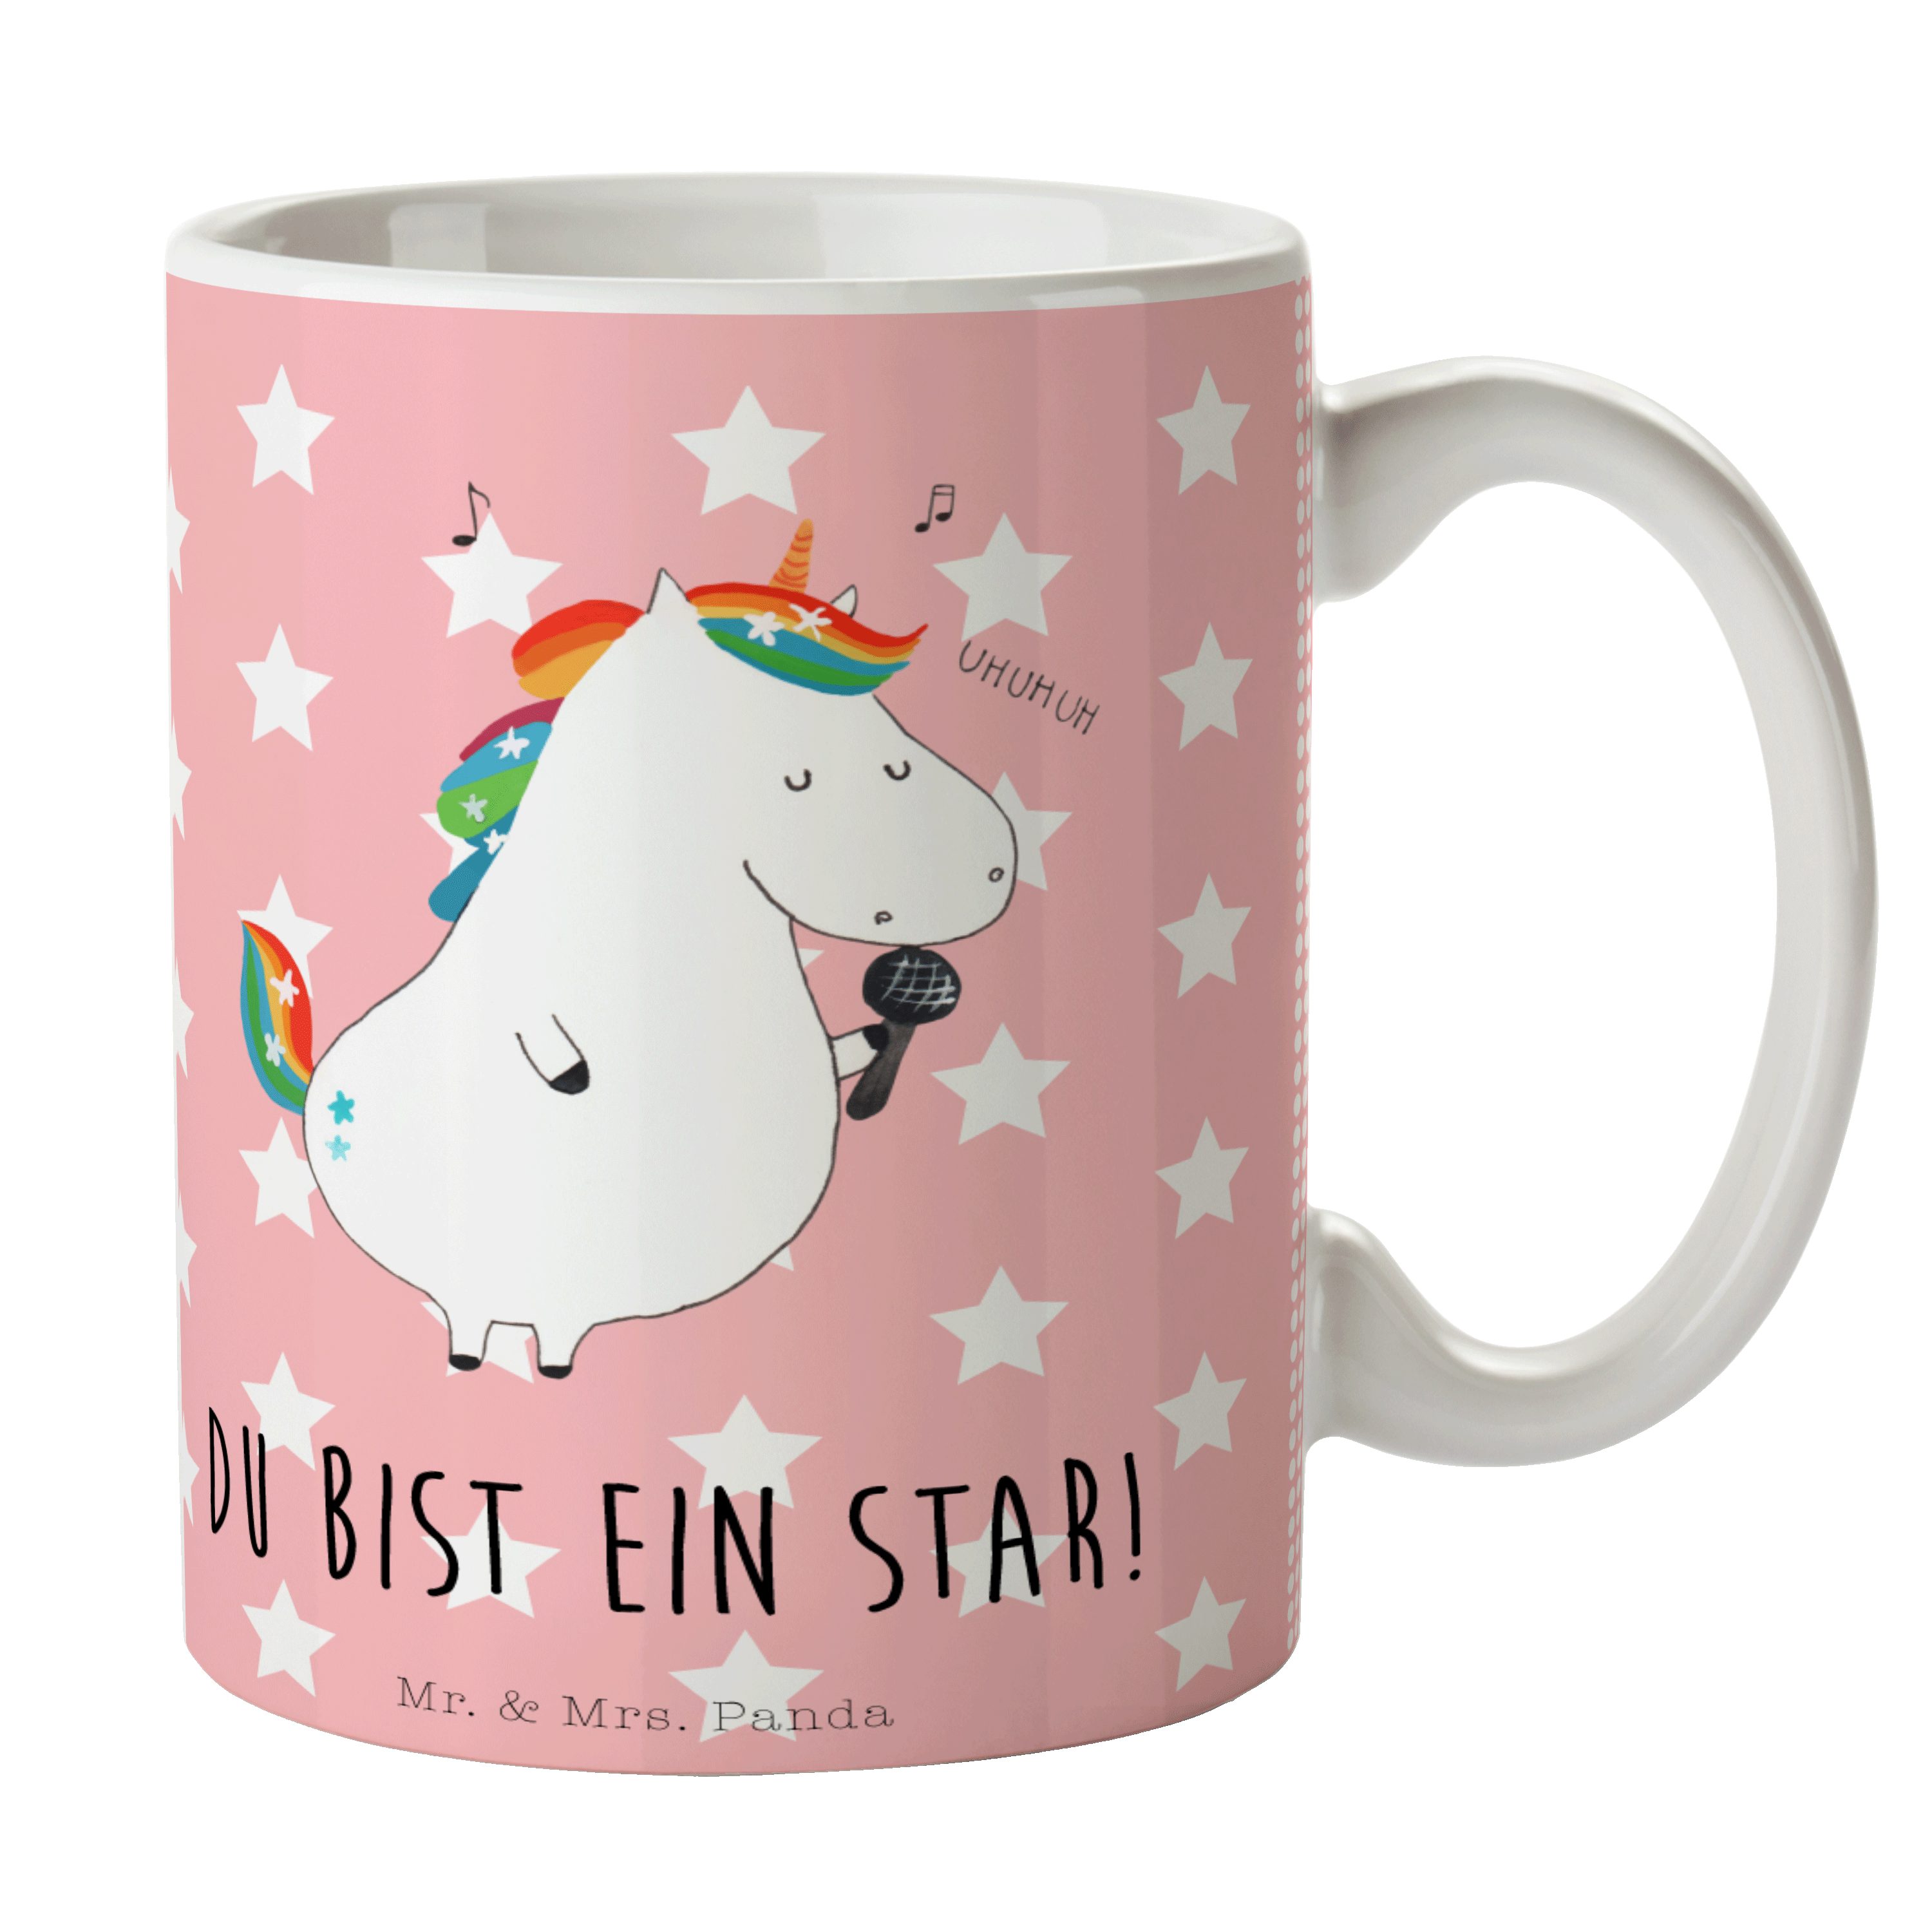 Mr. & Mrs. Panda Tasse Einhorn Sänger - Rot Pastell - Geschenk, Unicorn, Tasse, Disco, Teeta, Keramik